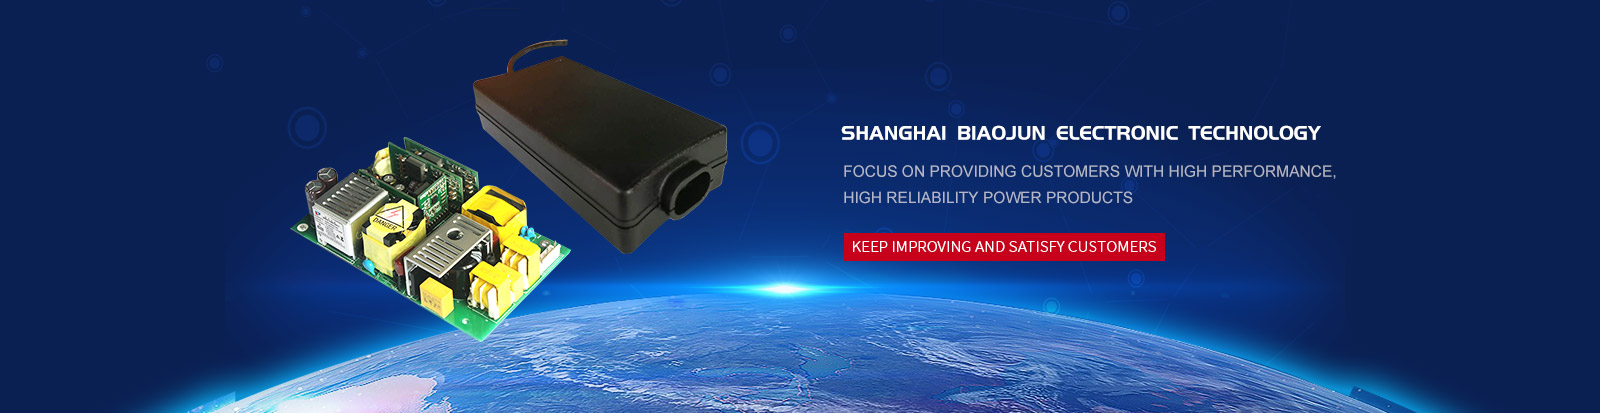 Shanghai Biaojun Electronic Technology Co., Ltd.